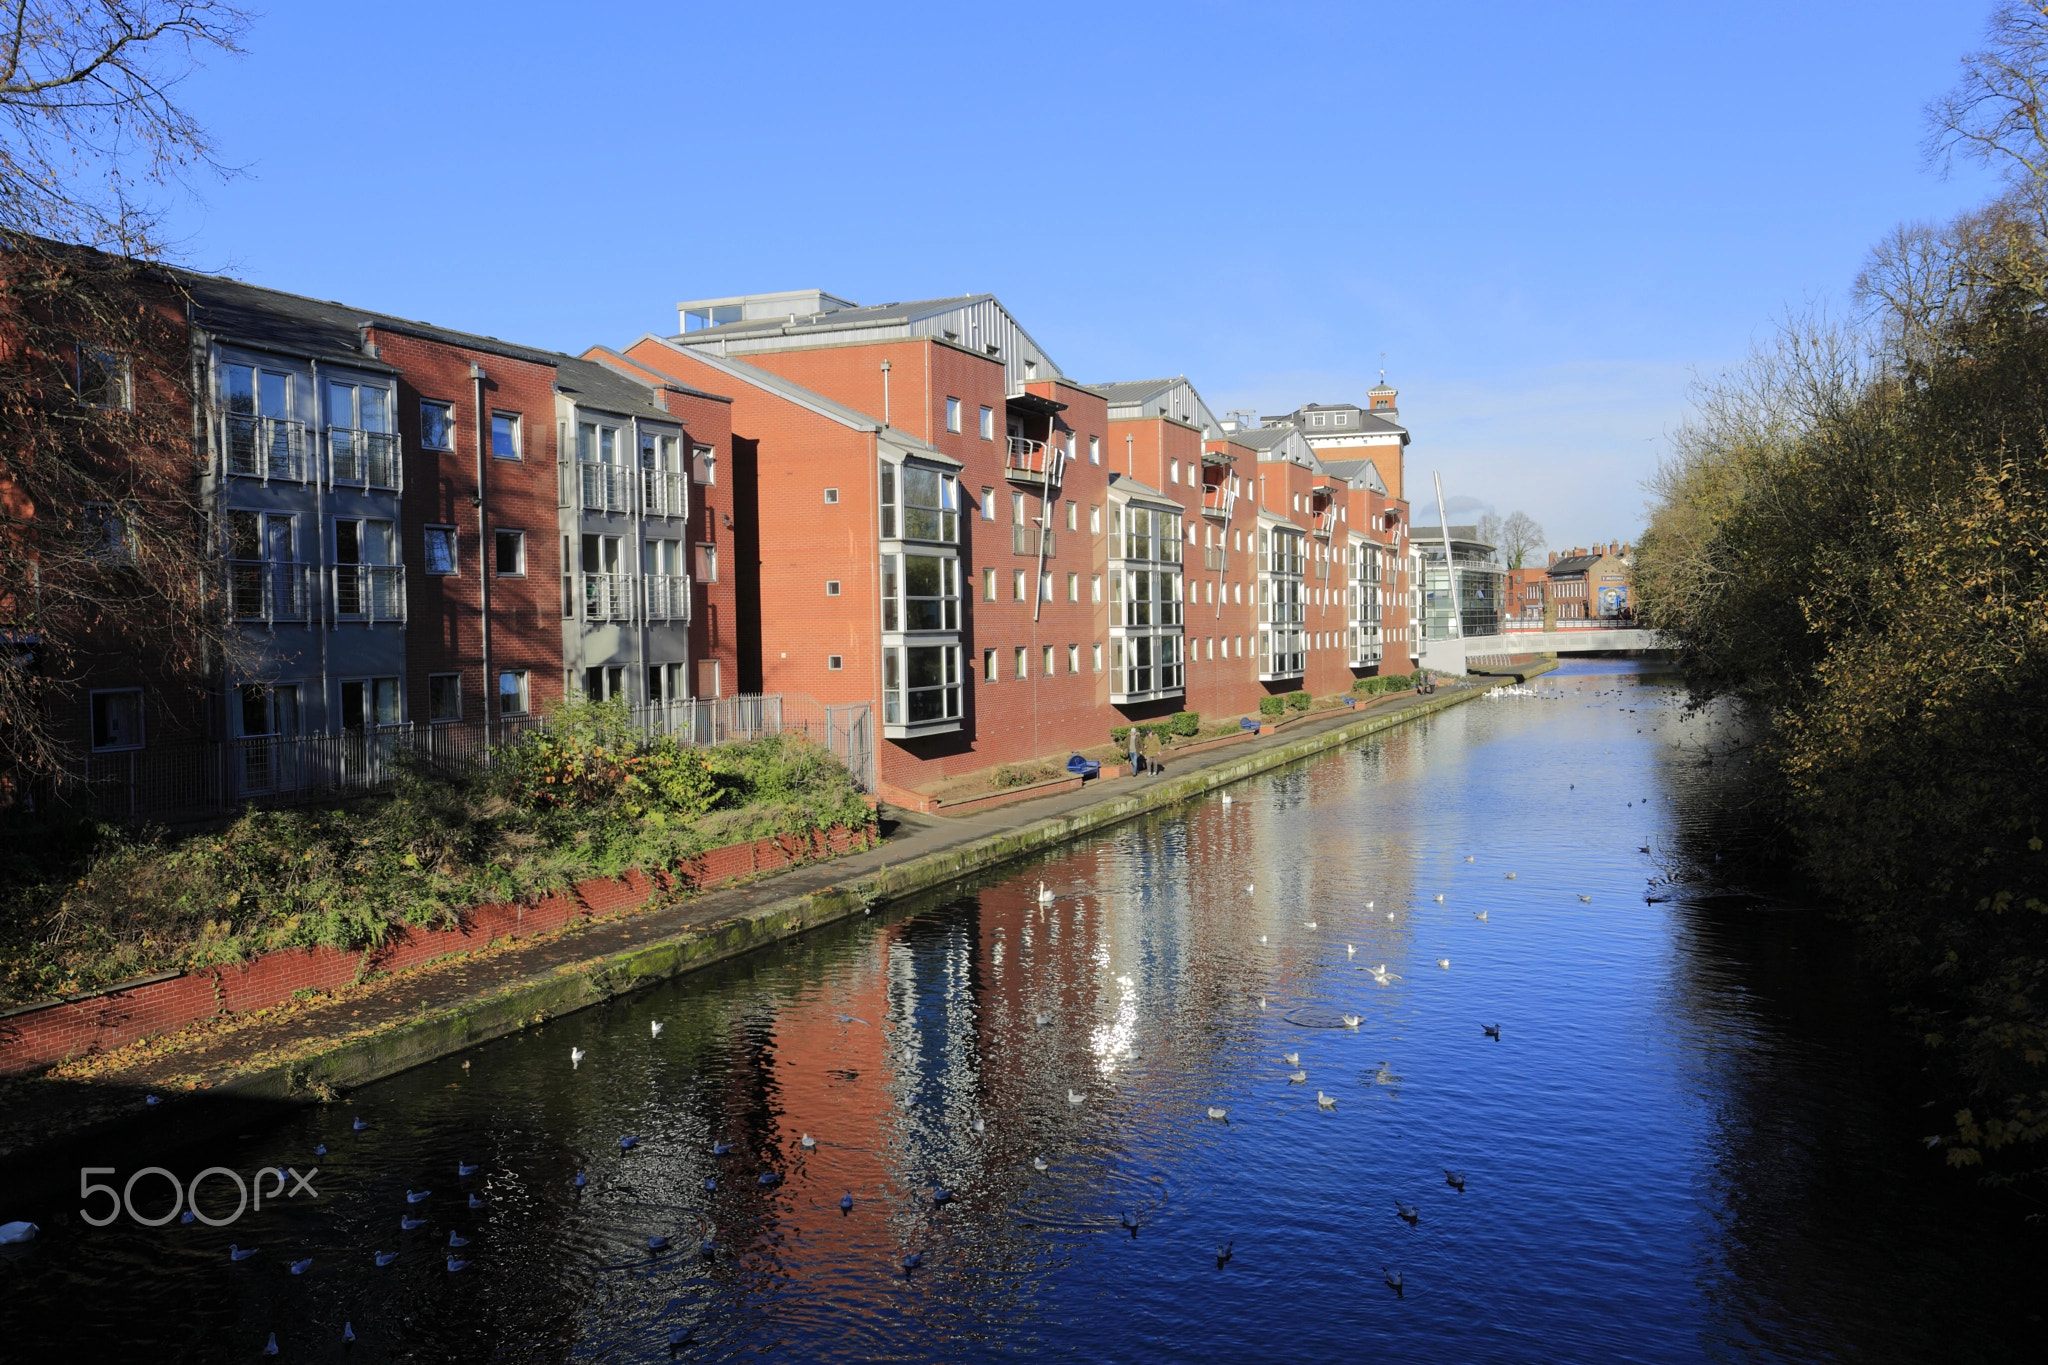 Buildings alongside the Grand Union Canal, Leicester City, Leice